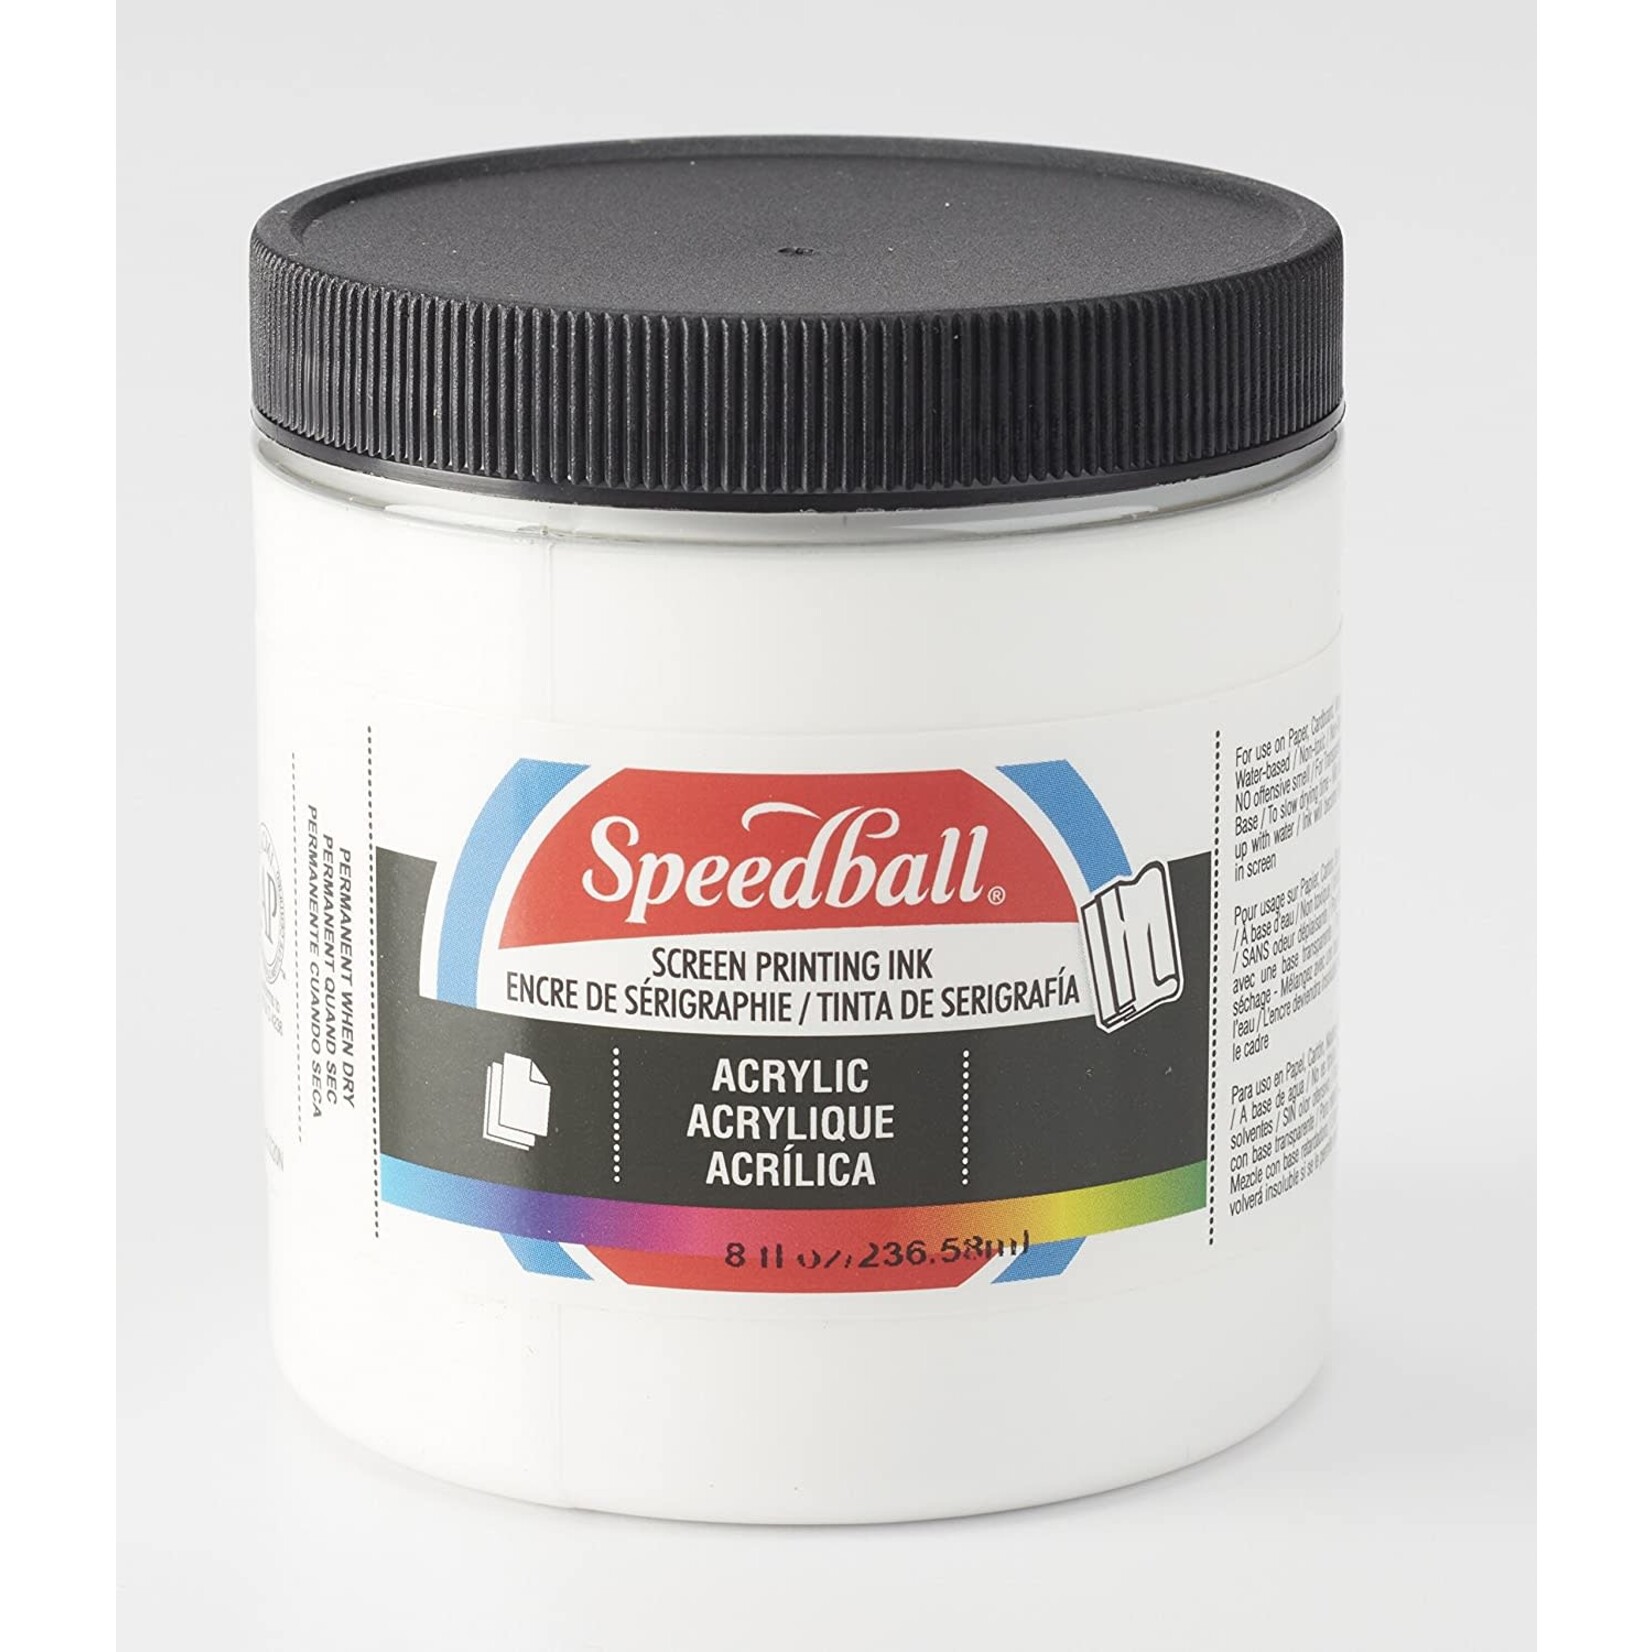 Speedball Acrylic Screen Printing Ink White 8oz